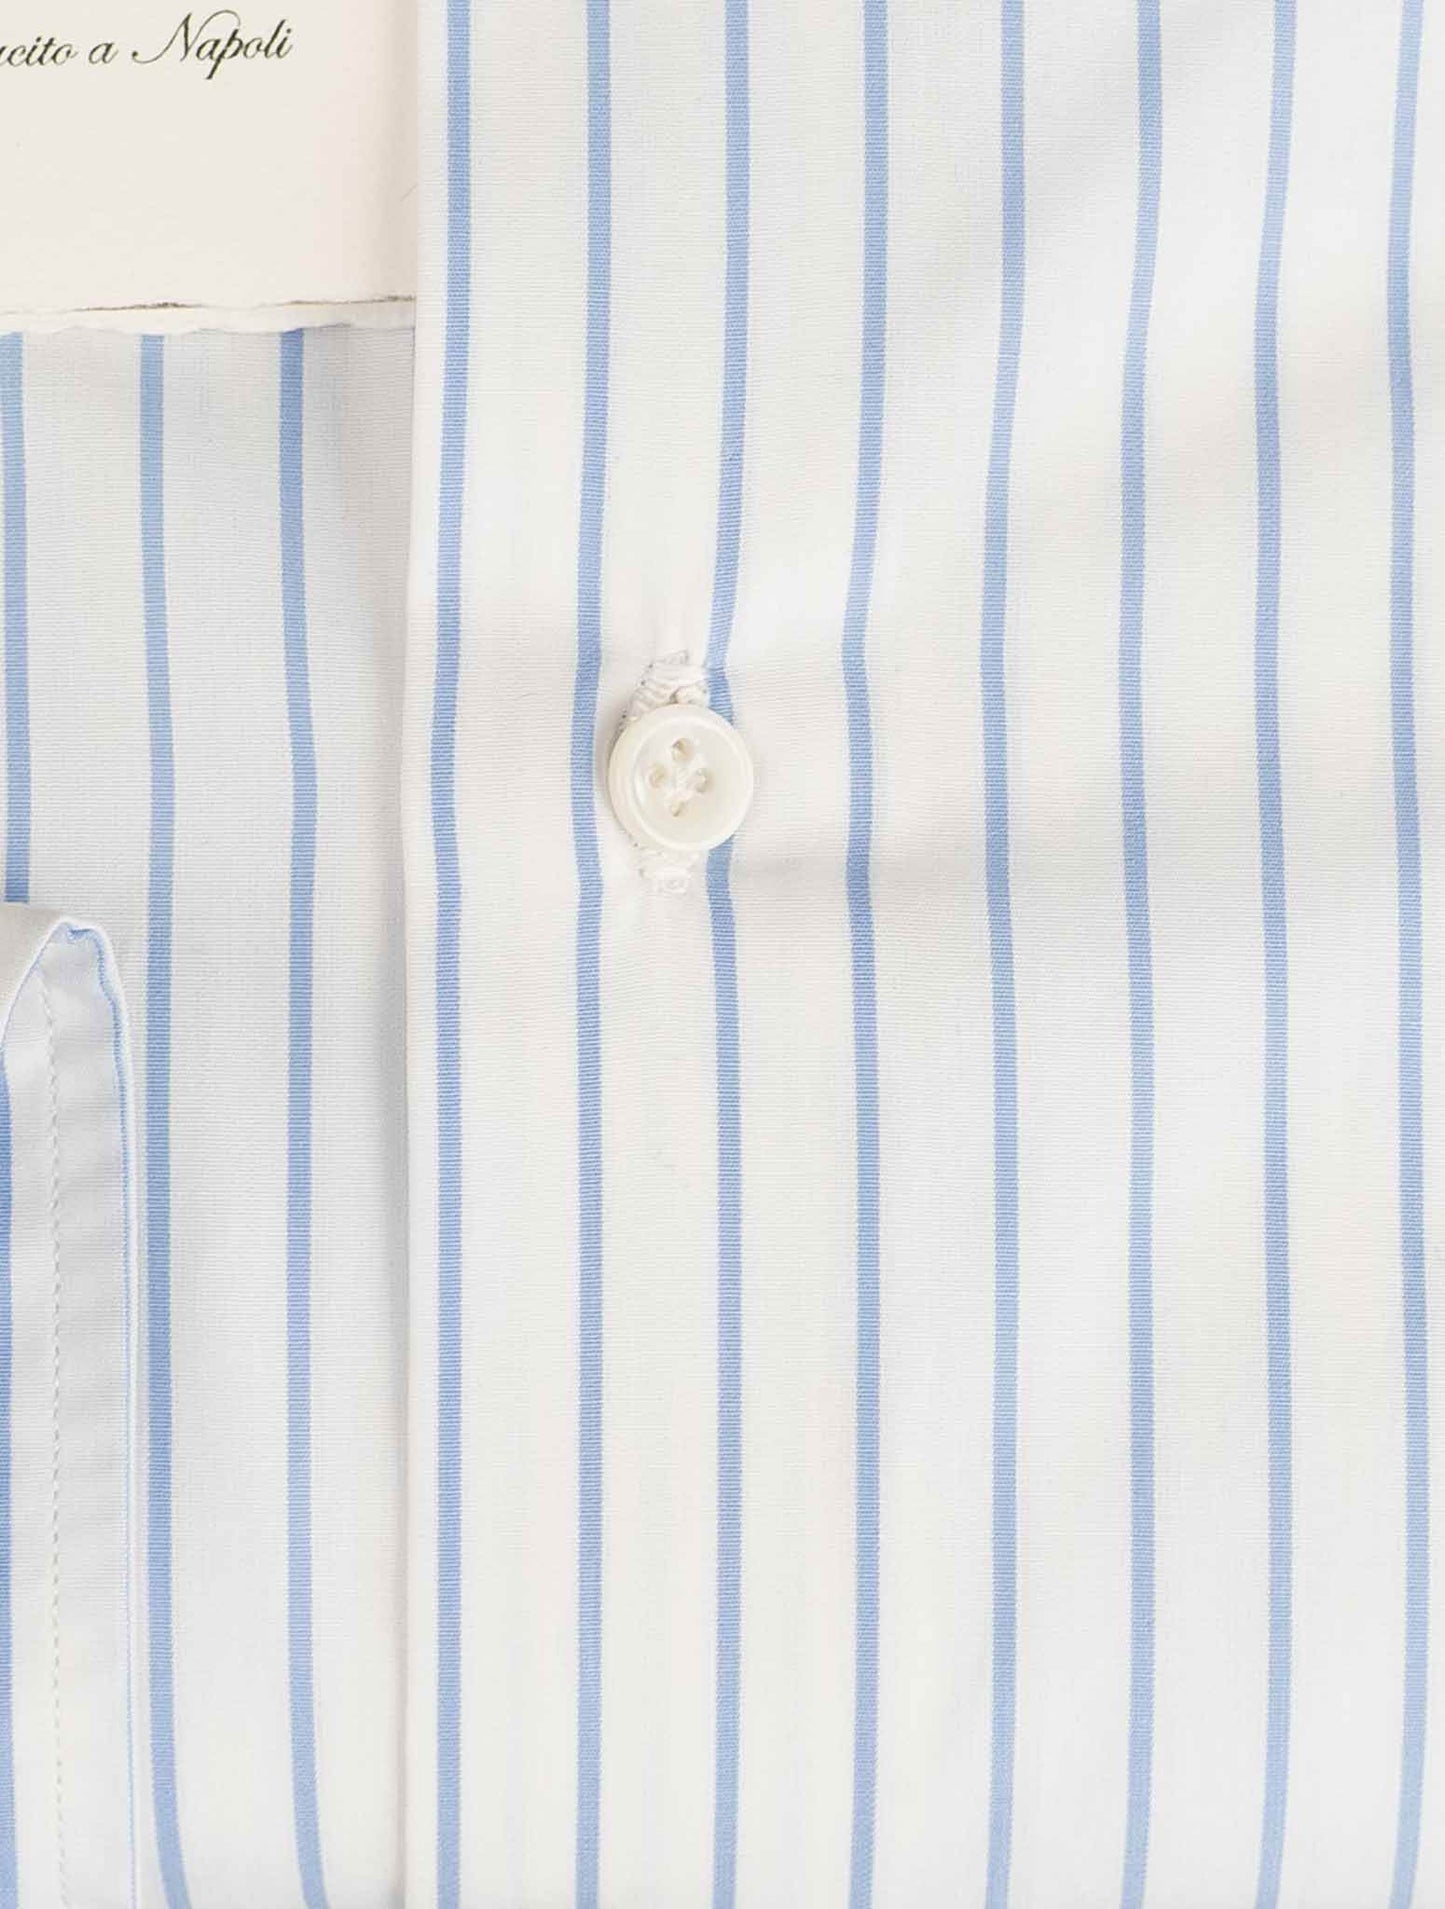 Luigi borrelli modrá bílá bavlněná košile